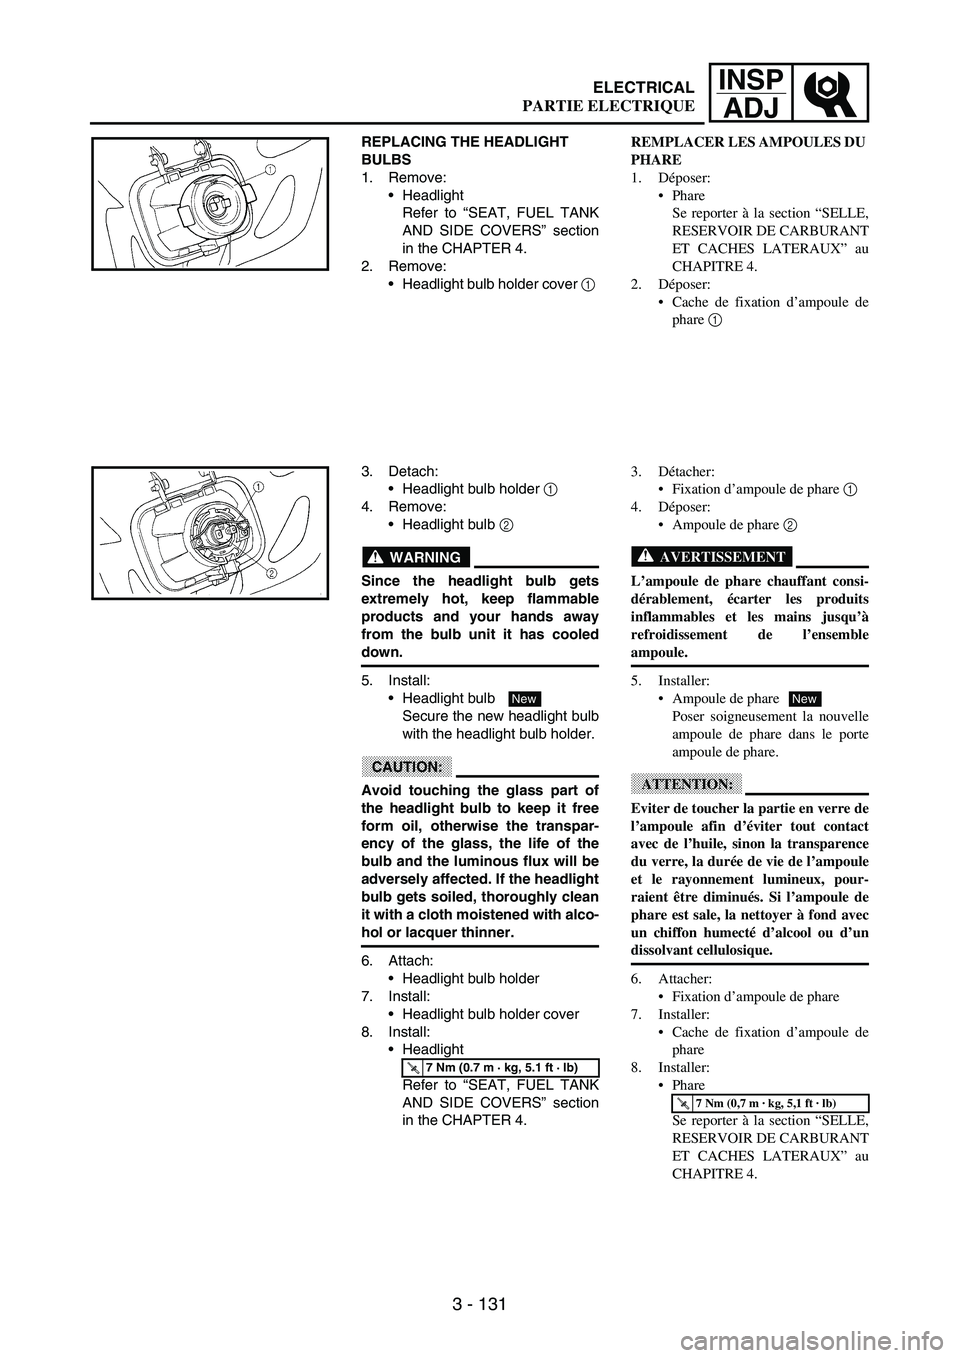 YAMAHA WR 250F 2003  Manuale de Empleo (in Spanish) 3 - 131
INSP
ADJ
REPLACING THE HEADLIGHT 
BULBS
1. Remove:
Headlight
Refer to “SEAT, FUEL TANK
AND SIDE COVERS” section
in the CHAPTER 4.
2. Remove:
Headlight bulb holder cover 
1 
3. Detach:
H